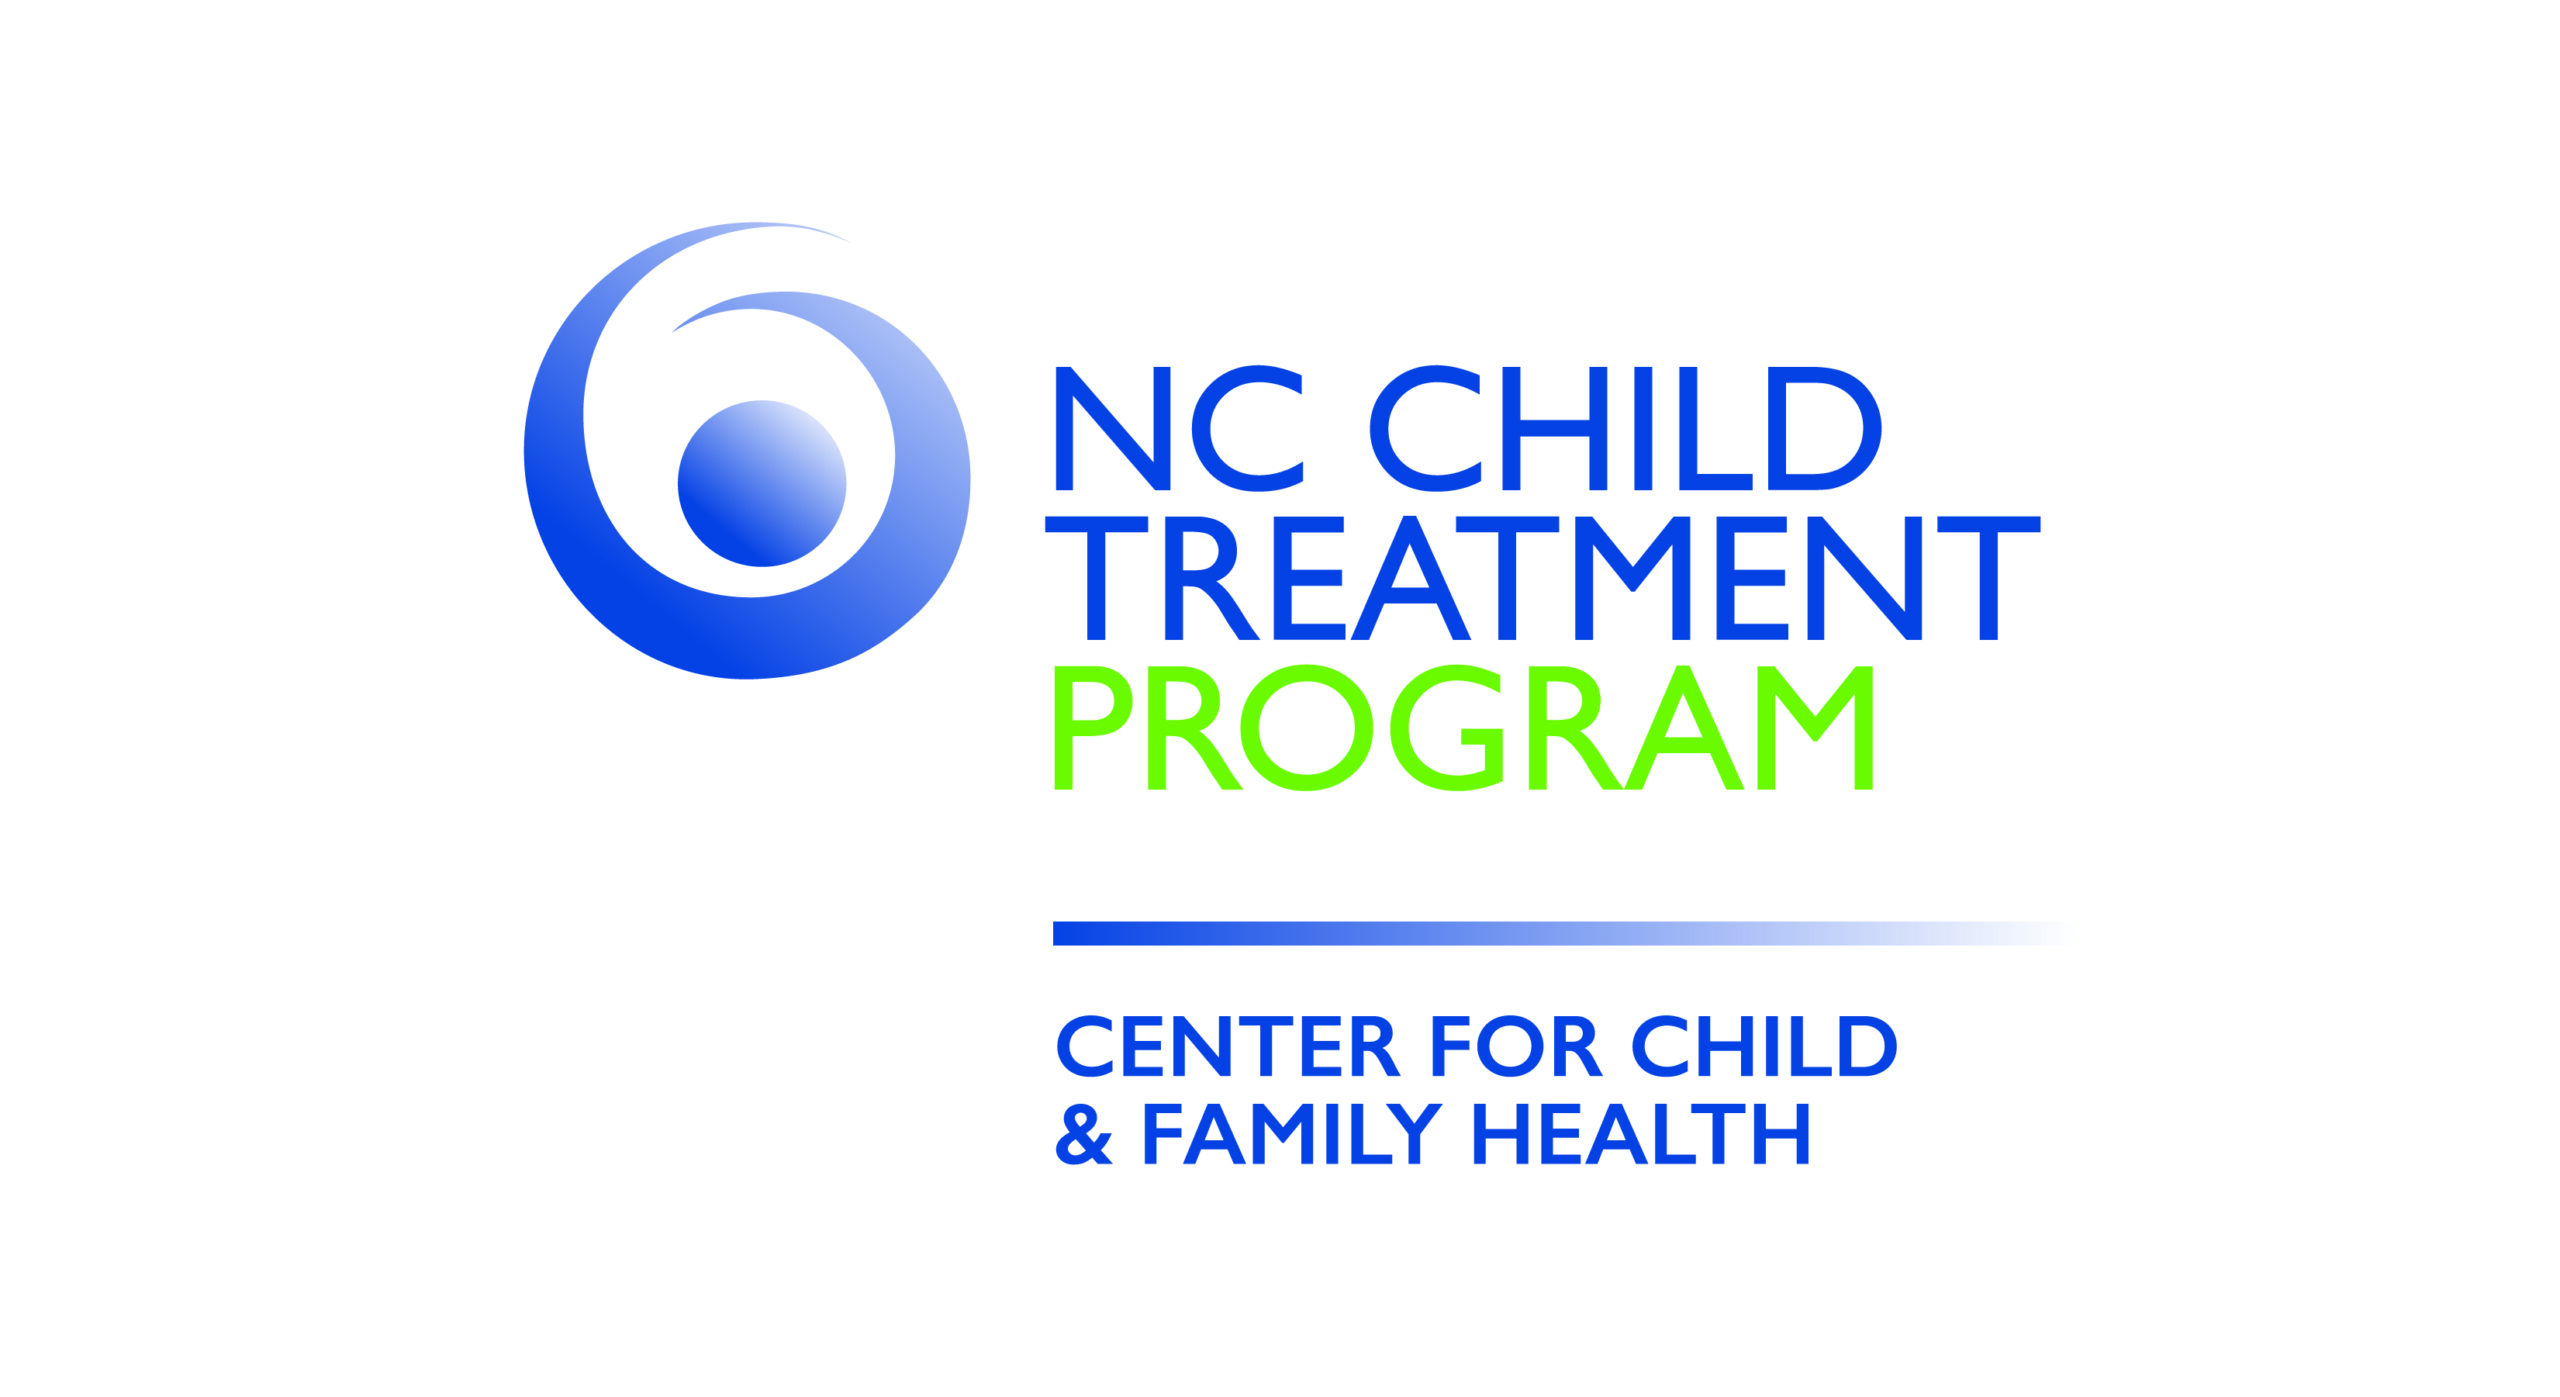 NC Child Treatment Program, Center for Child & Family Health